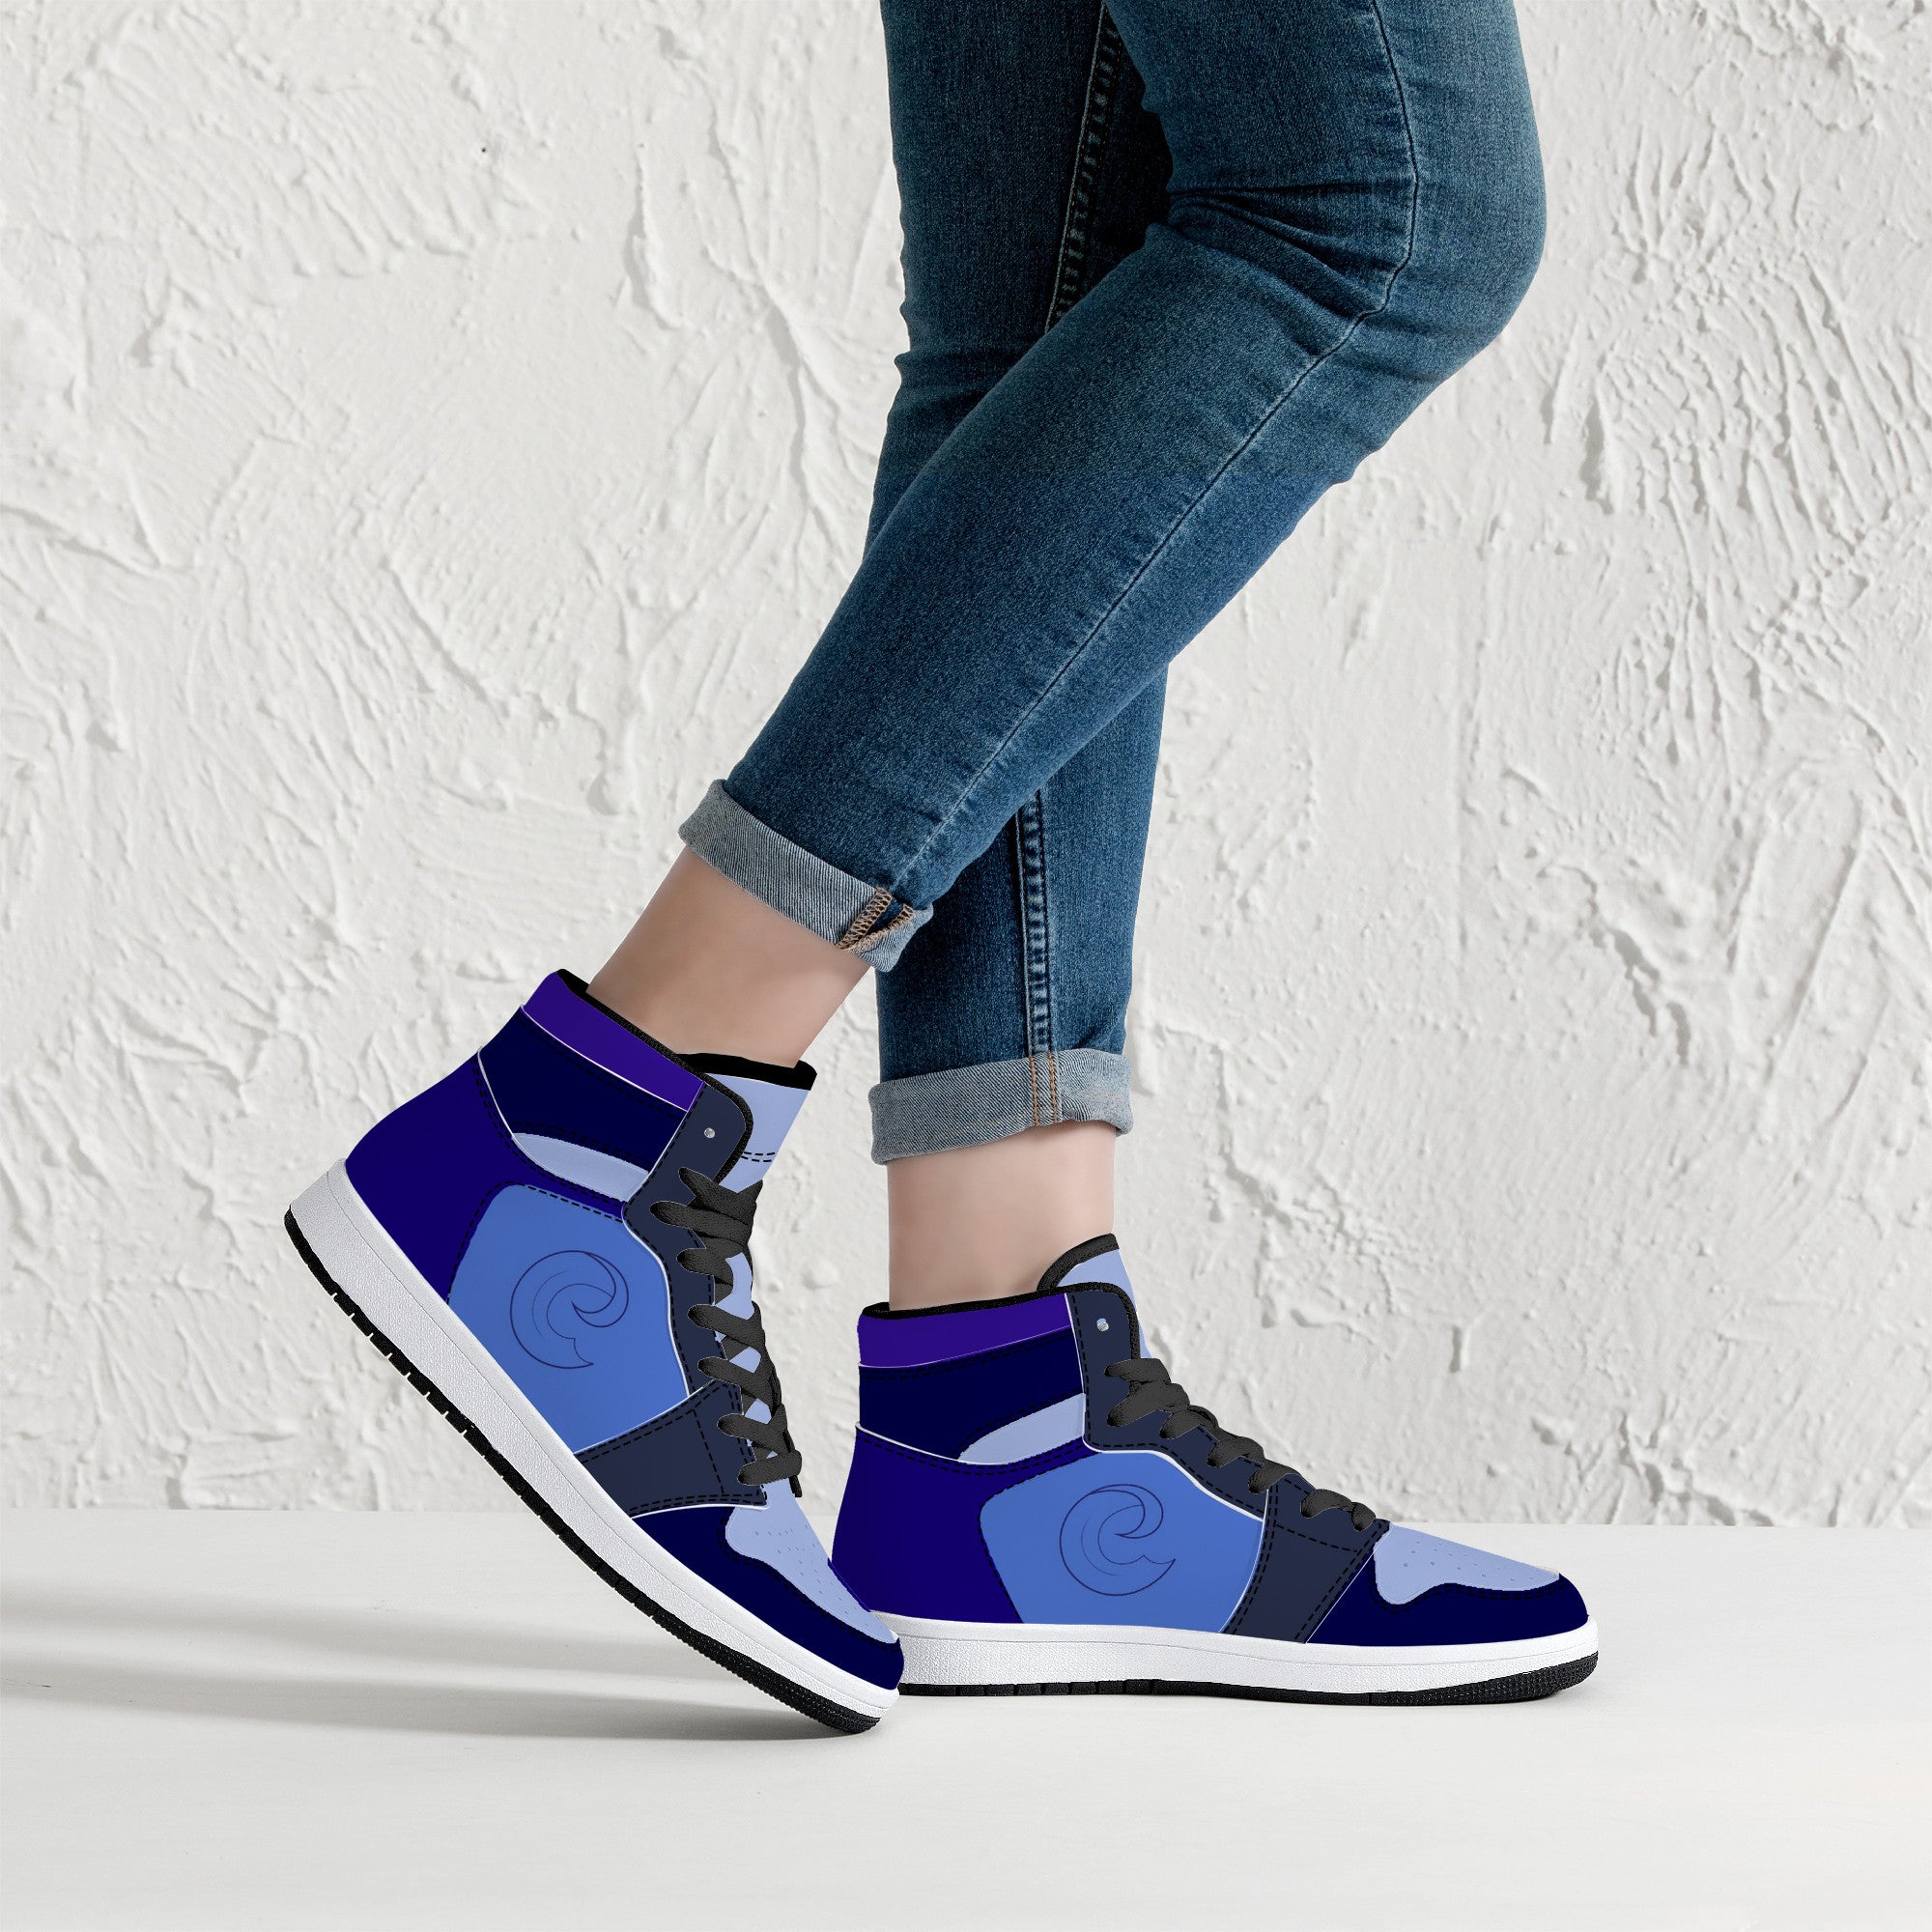 Cool shoes by Mason L | High Top Customized | Shoe Zero